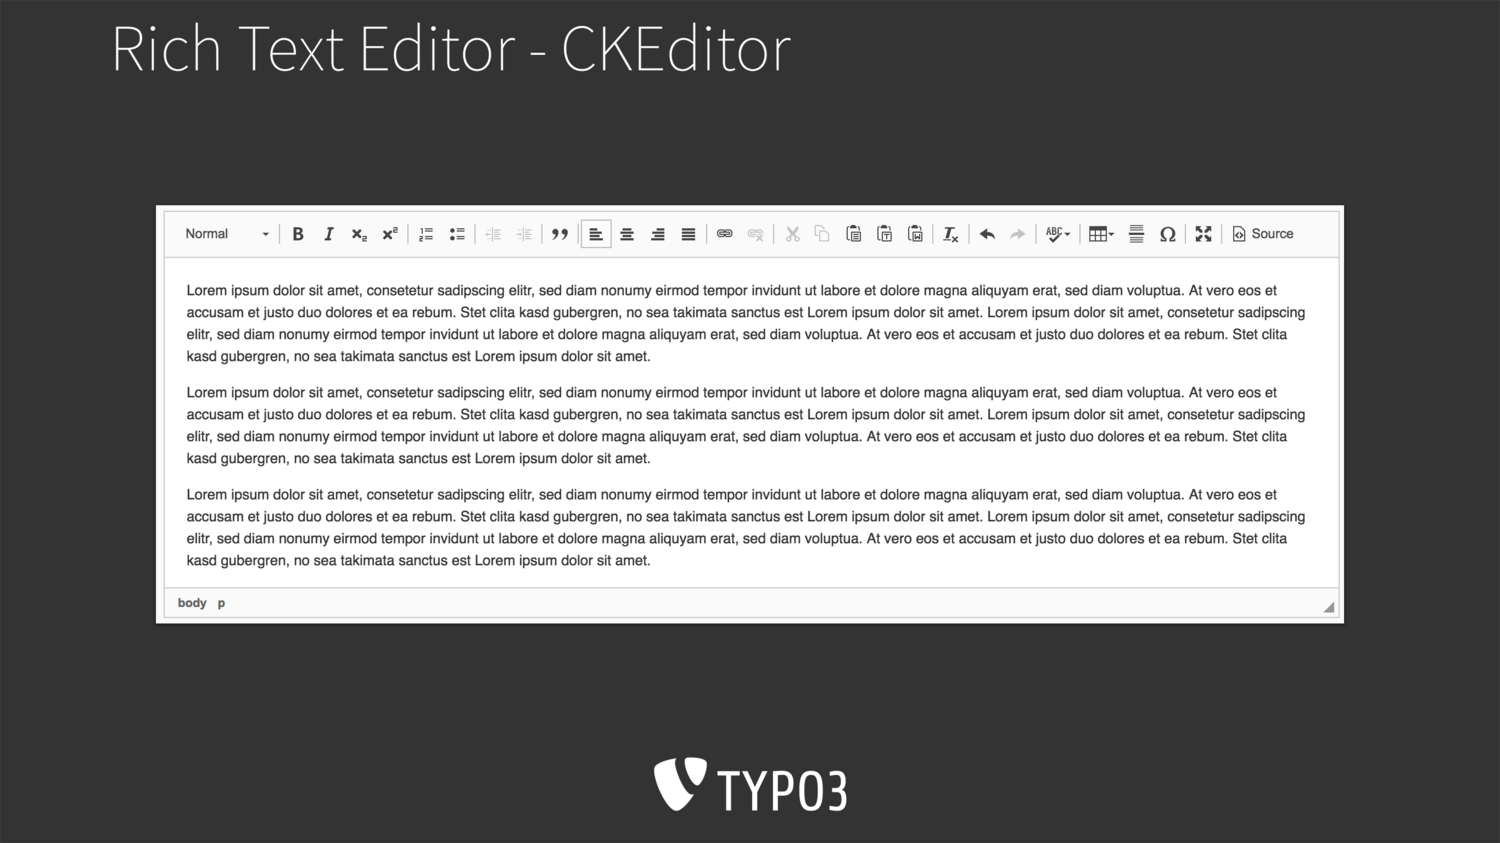 Rich text editor - CKEditor